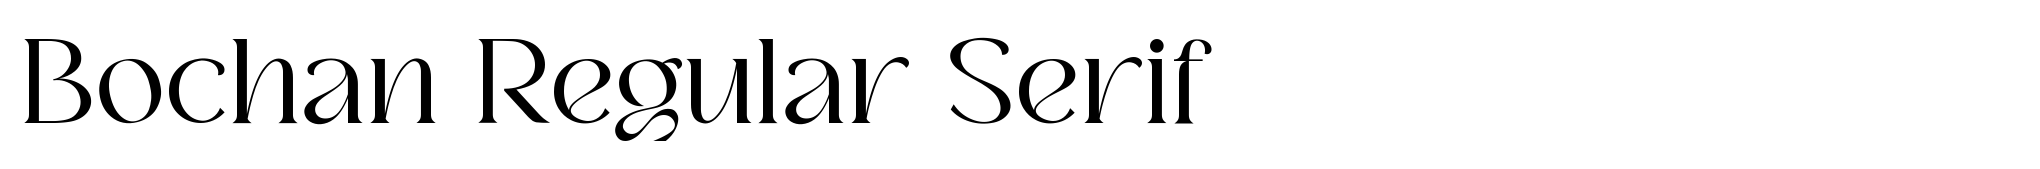 Bochan Regular Serif image